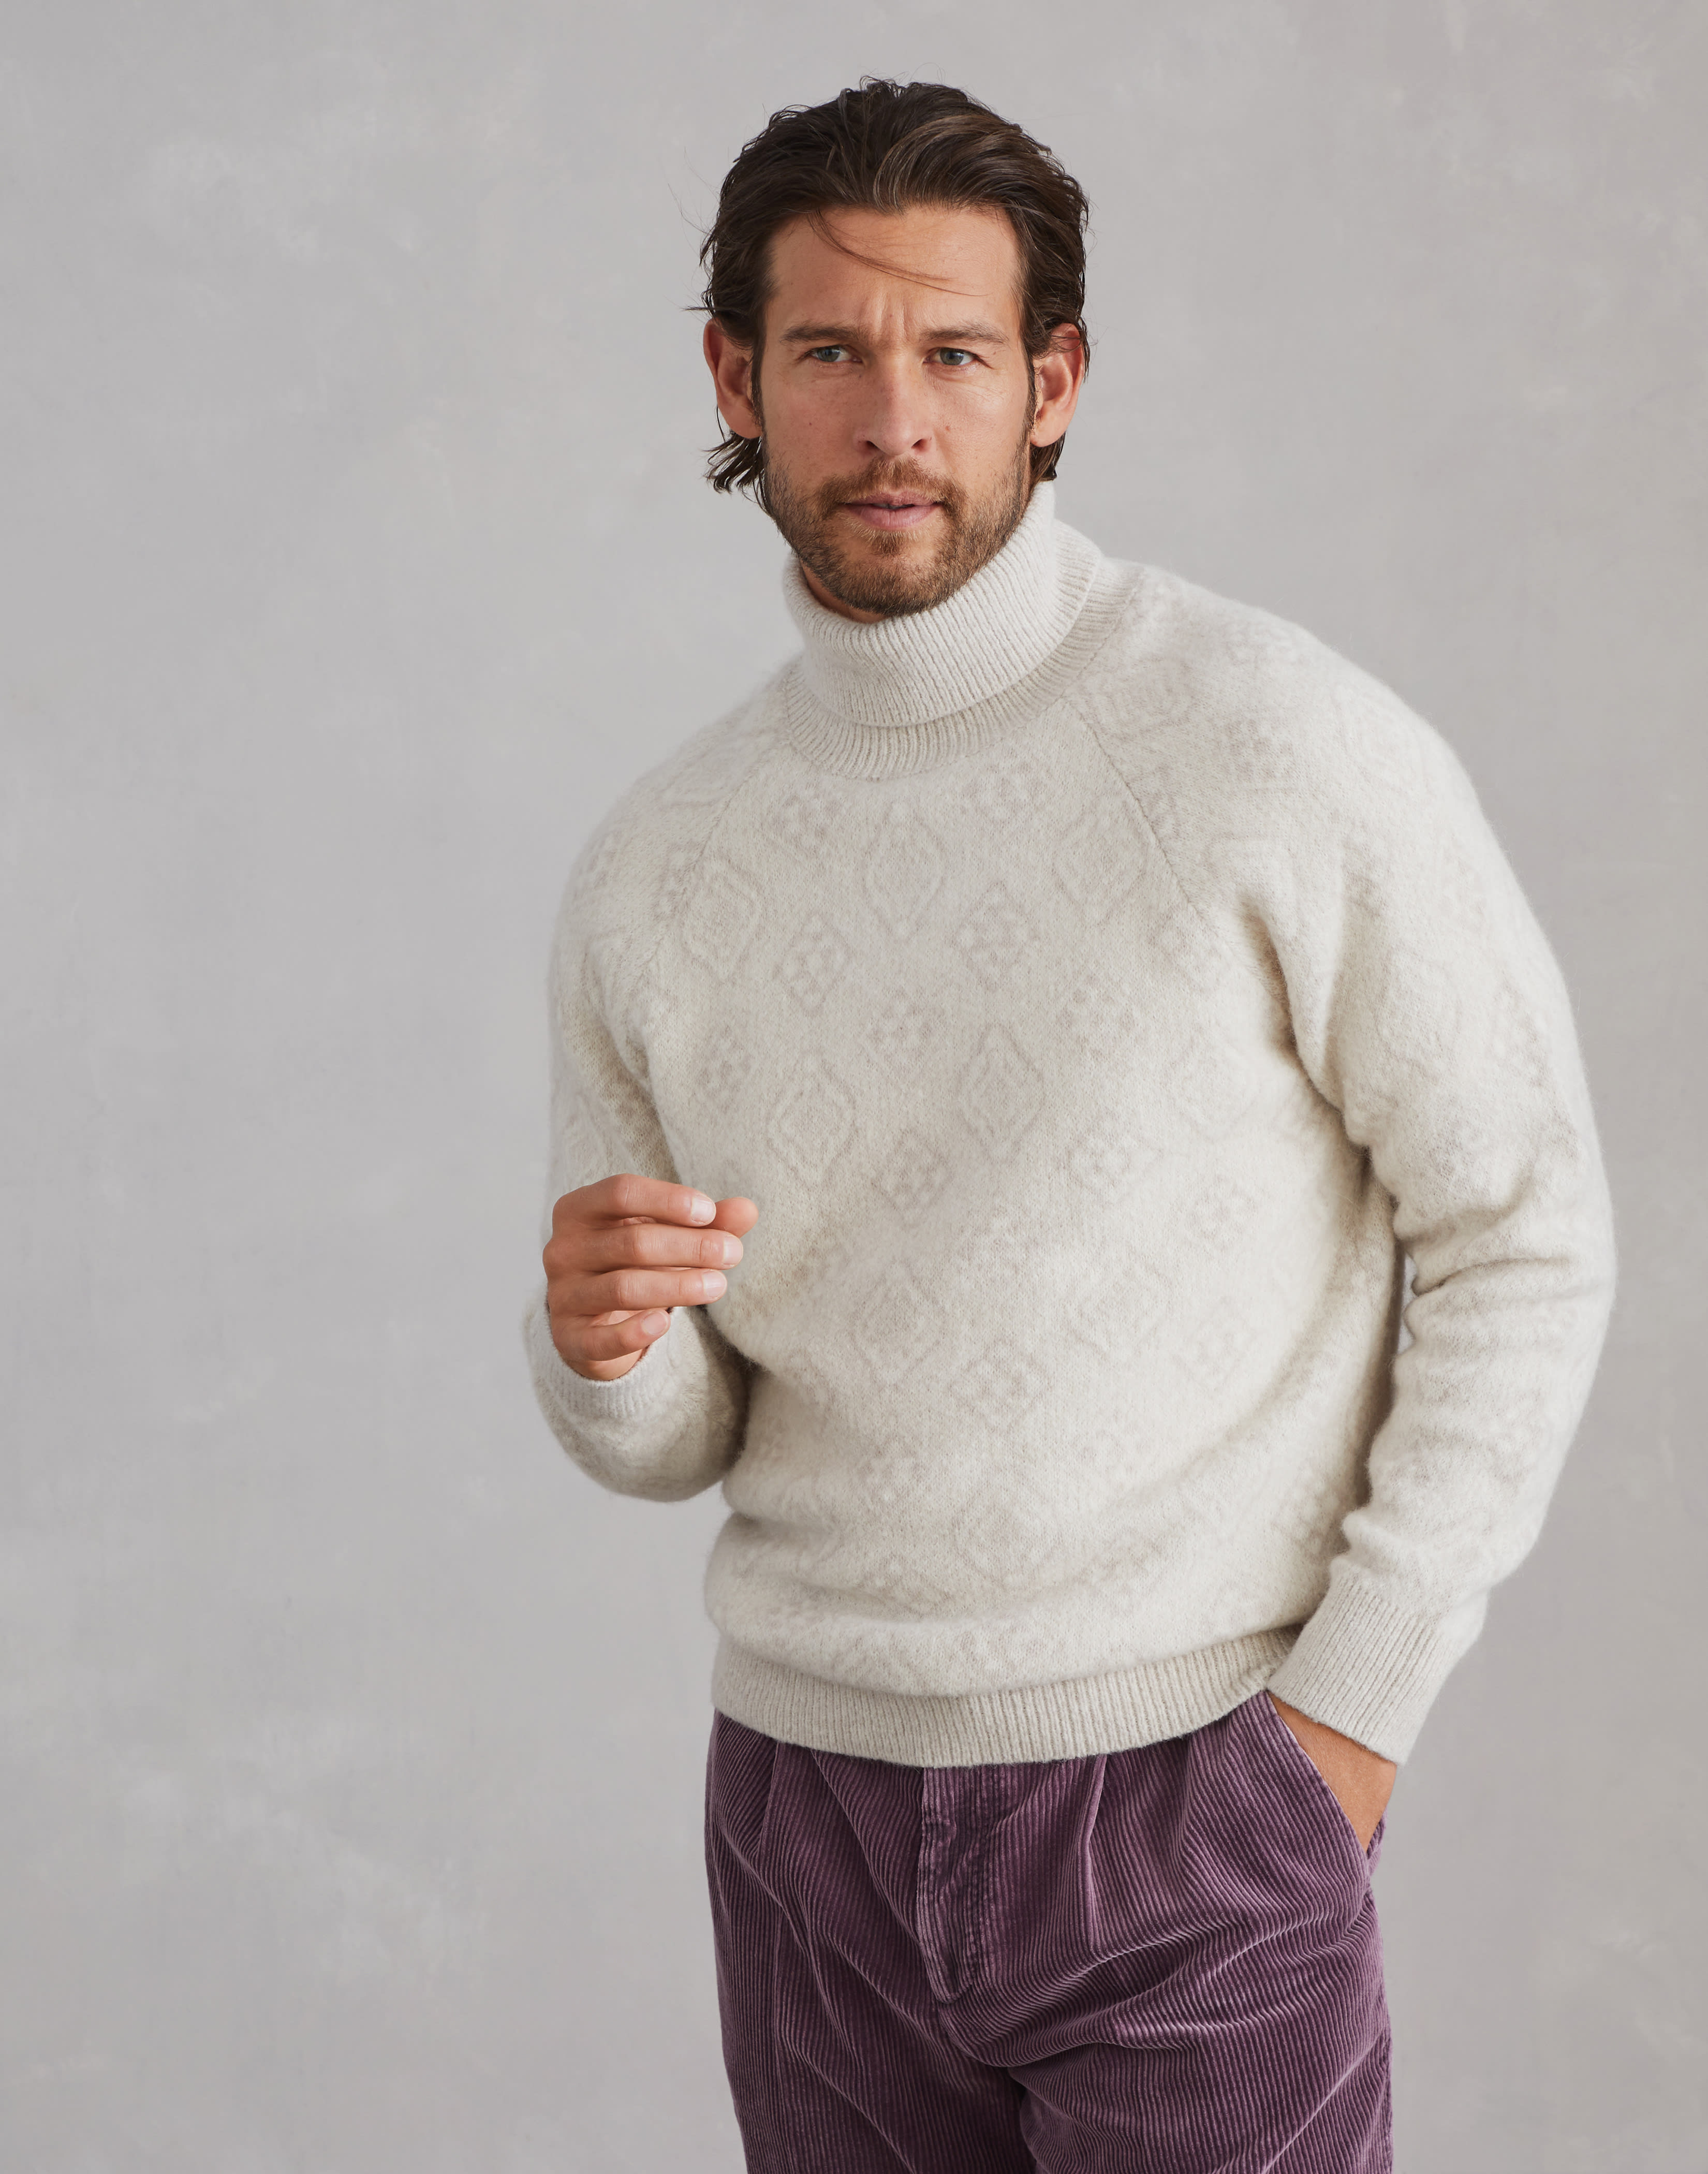 Geometric Jacquard turtleneck sweater